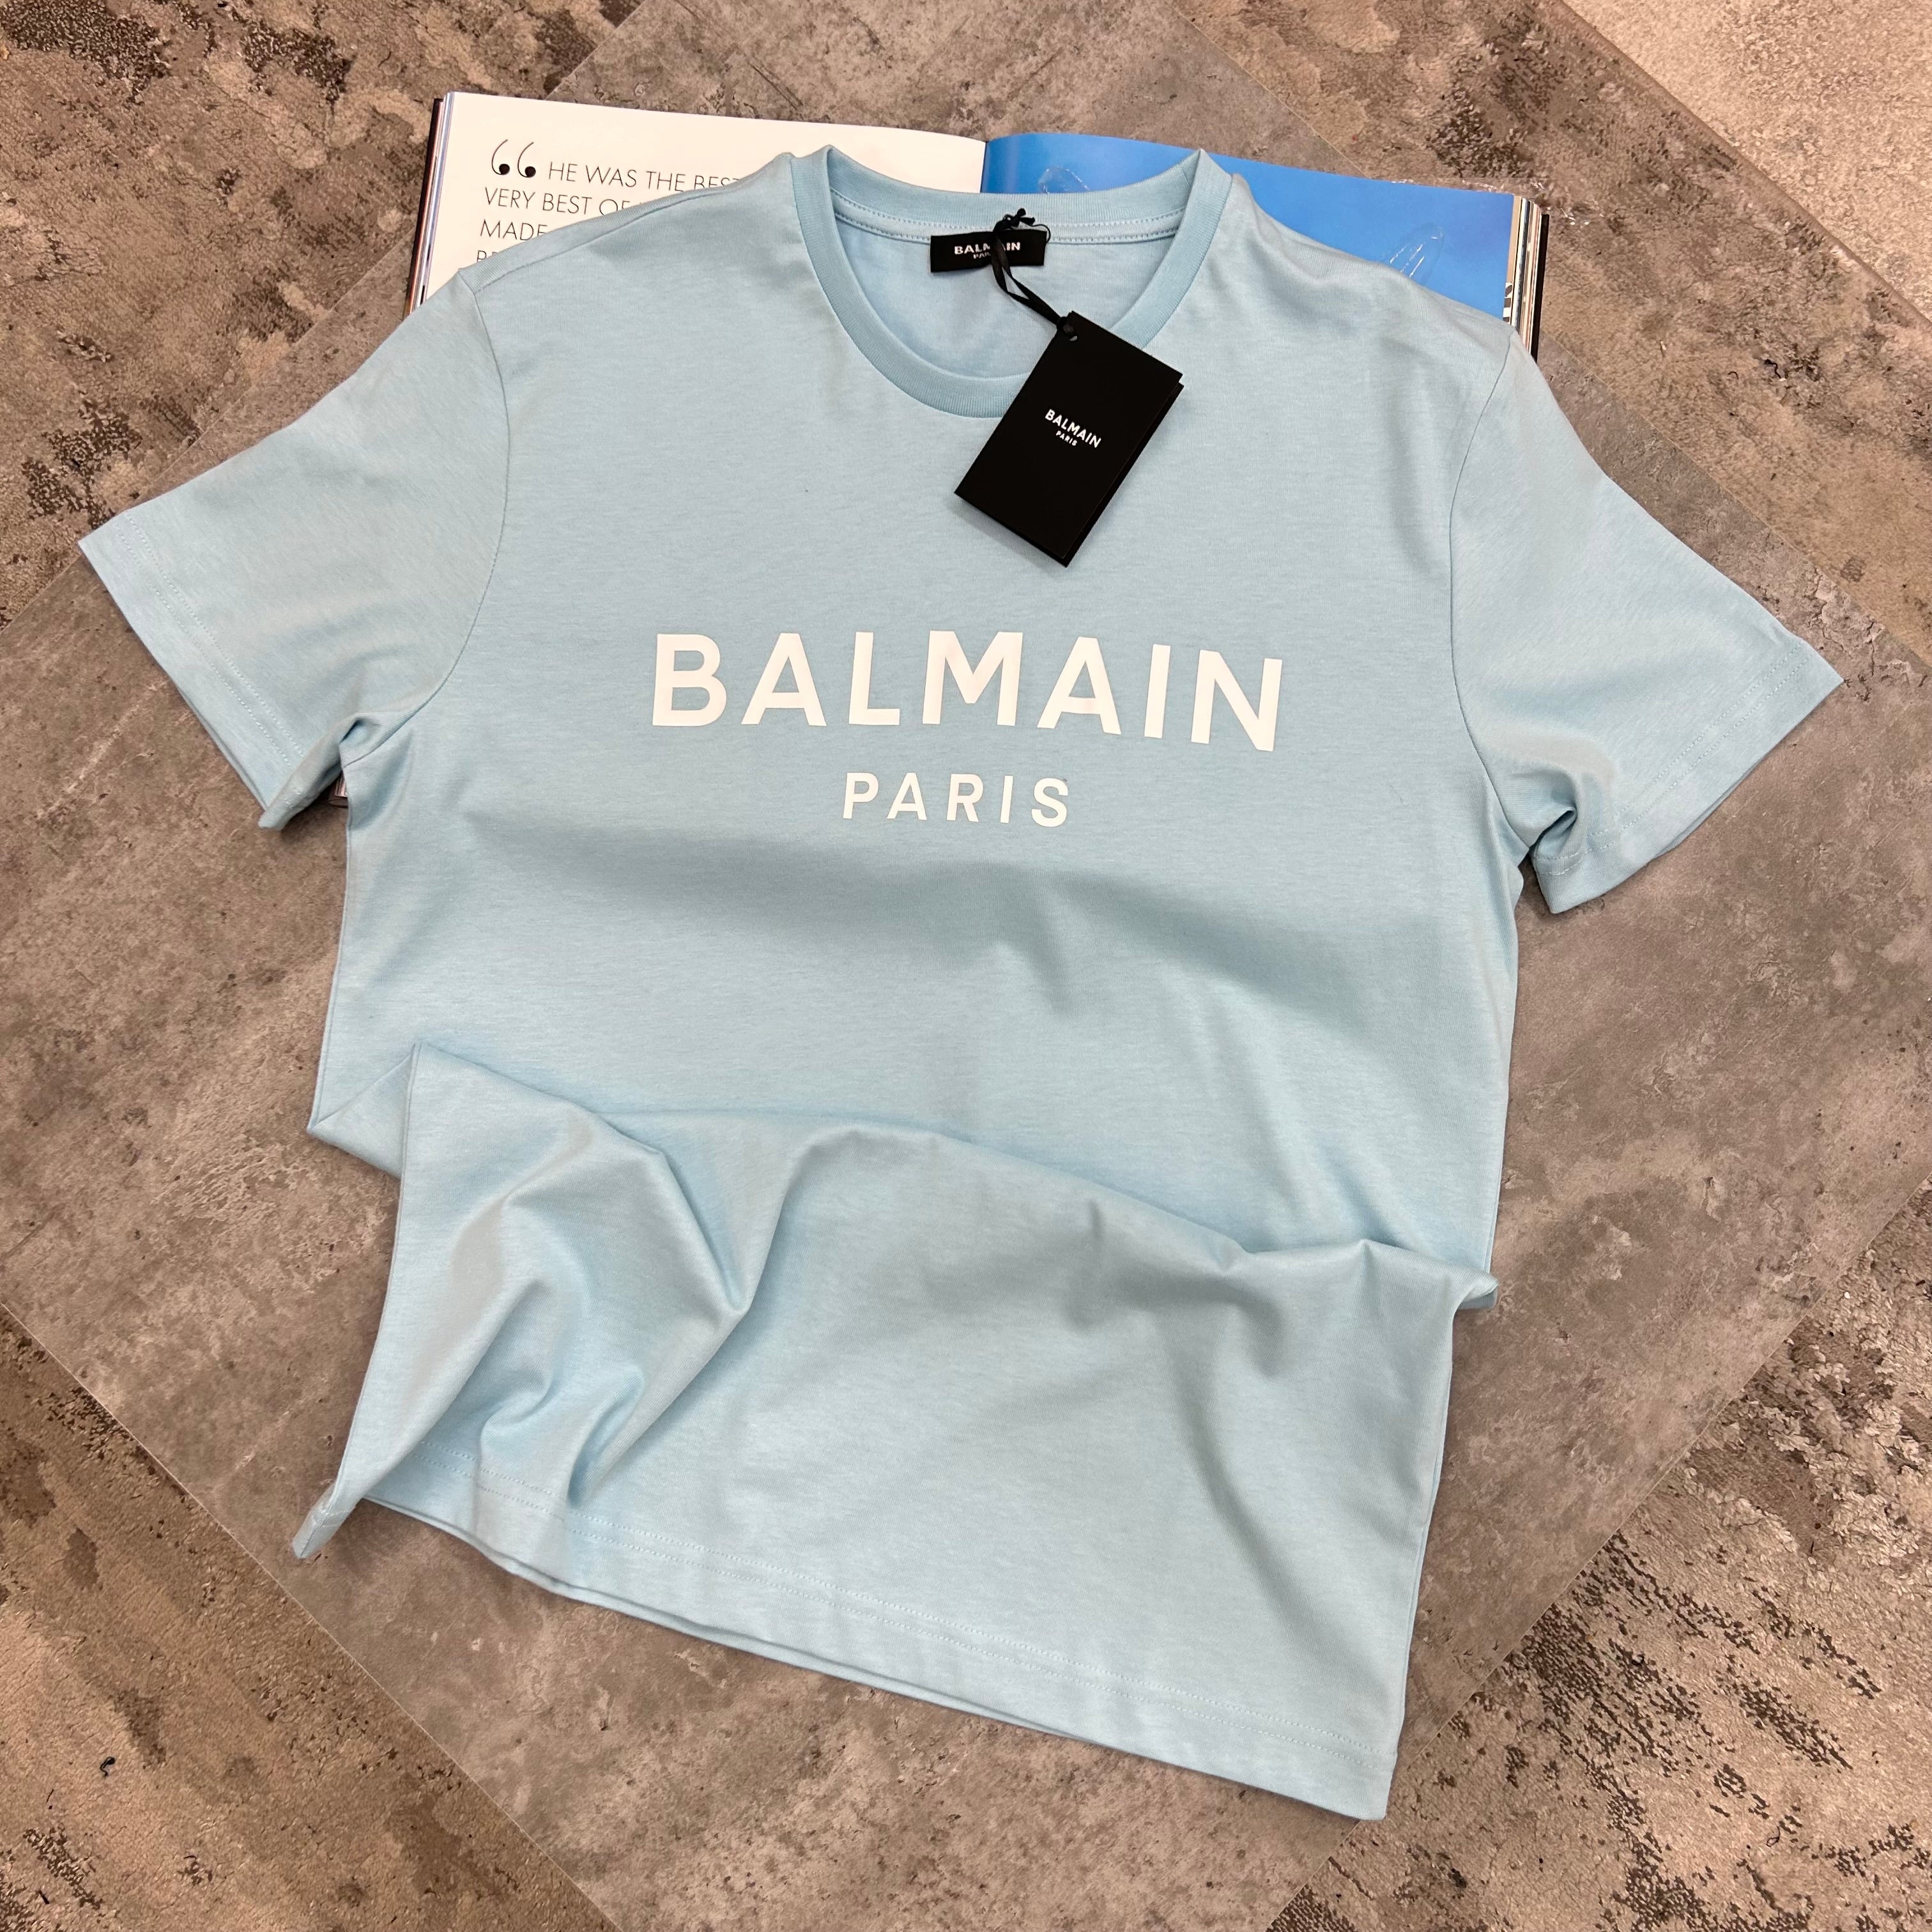 BALMAIN - PRINT LOGO T-SHIRT - SKY BLUE